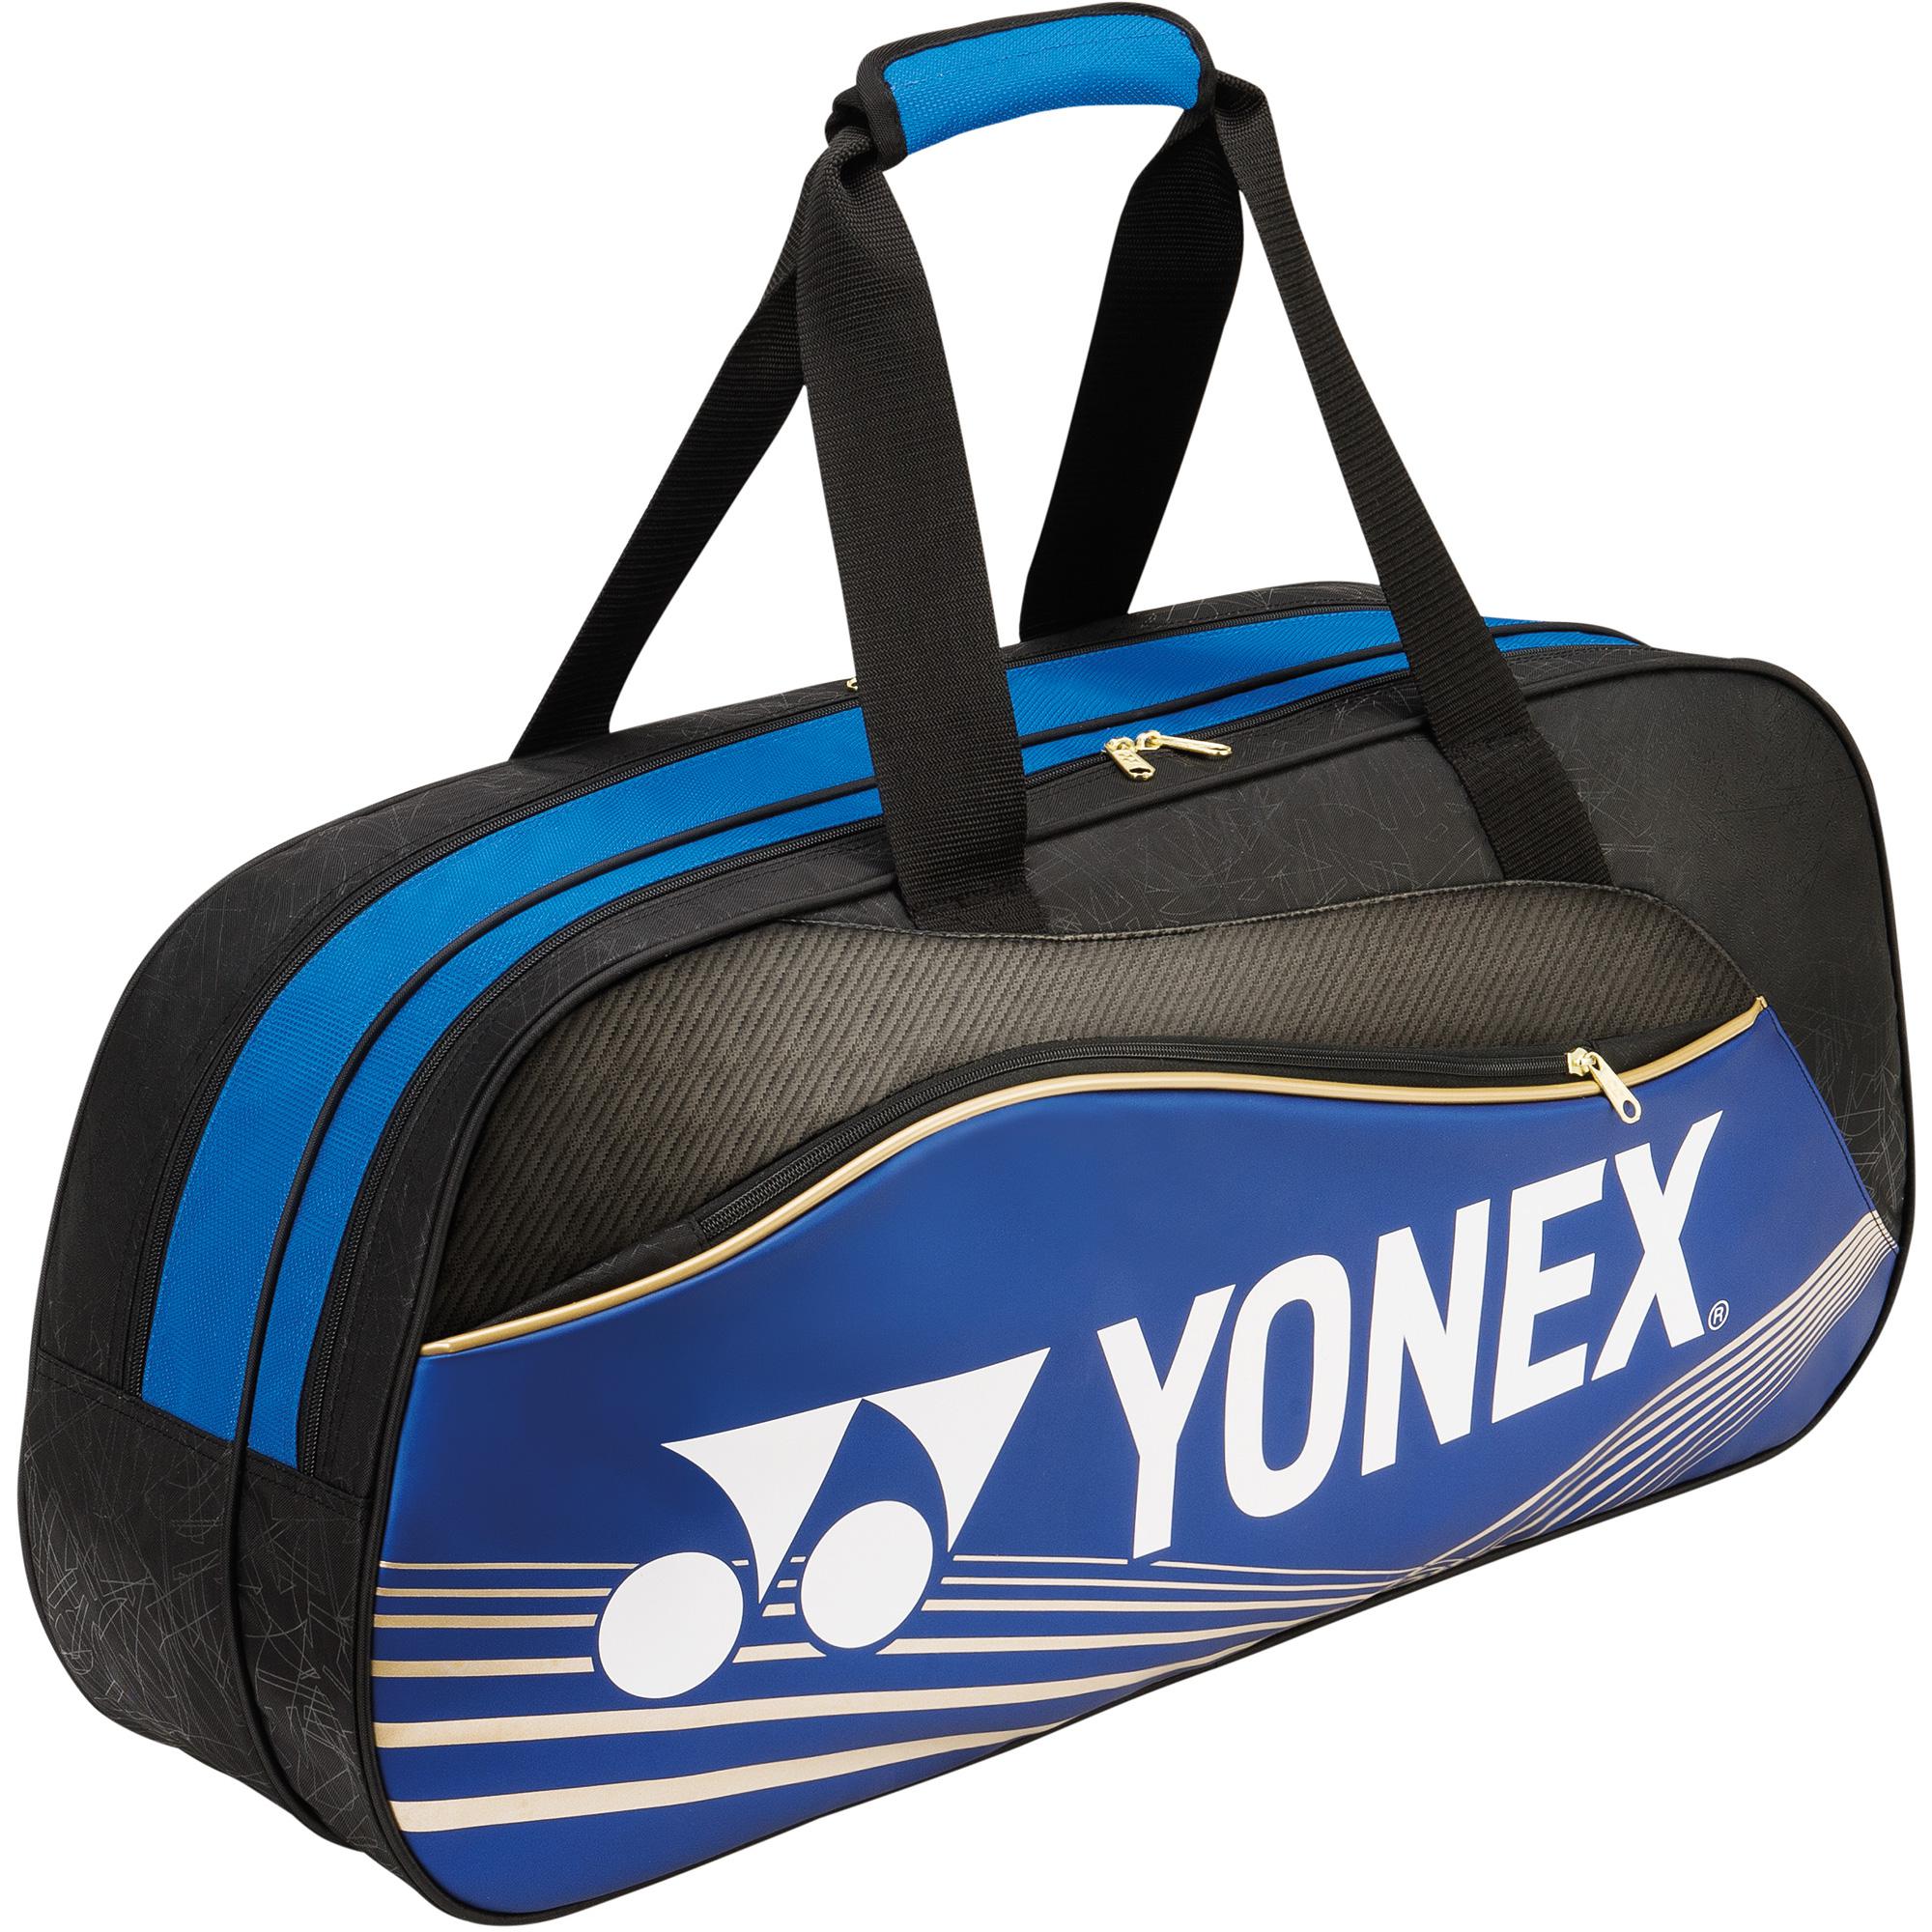 Сумка для бадминтона. Для бадминтона сумка сумка Yonex. Сумка для бадминтона Apex. Сумка для бадминтона ёнекс. Yonex Tennis Bag.